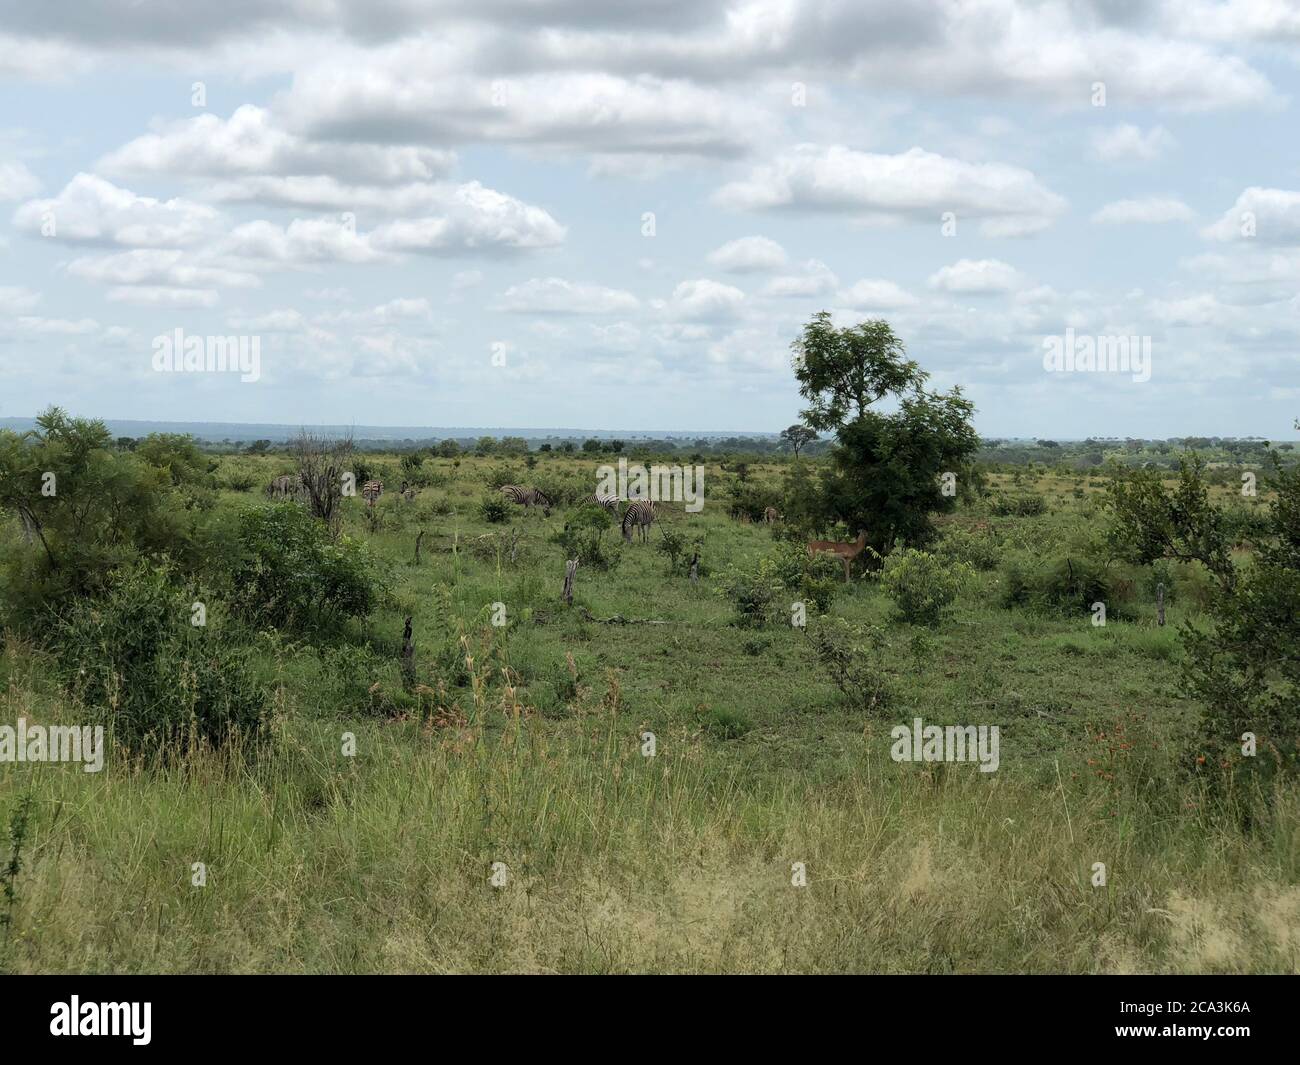 Grassland with wild safari animals in the background. Stock Photo